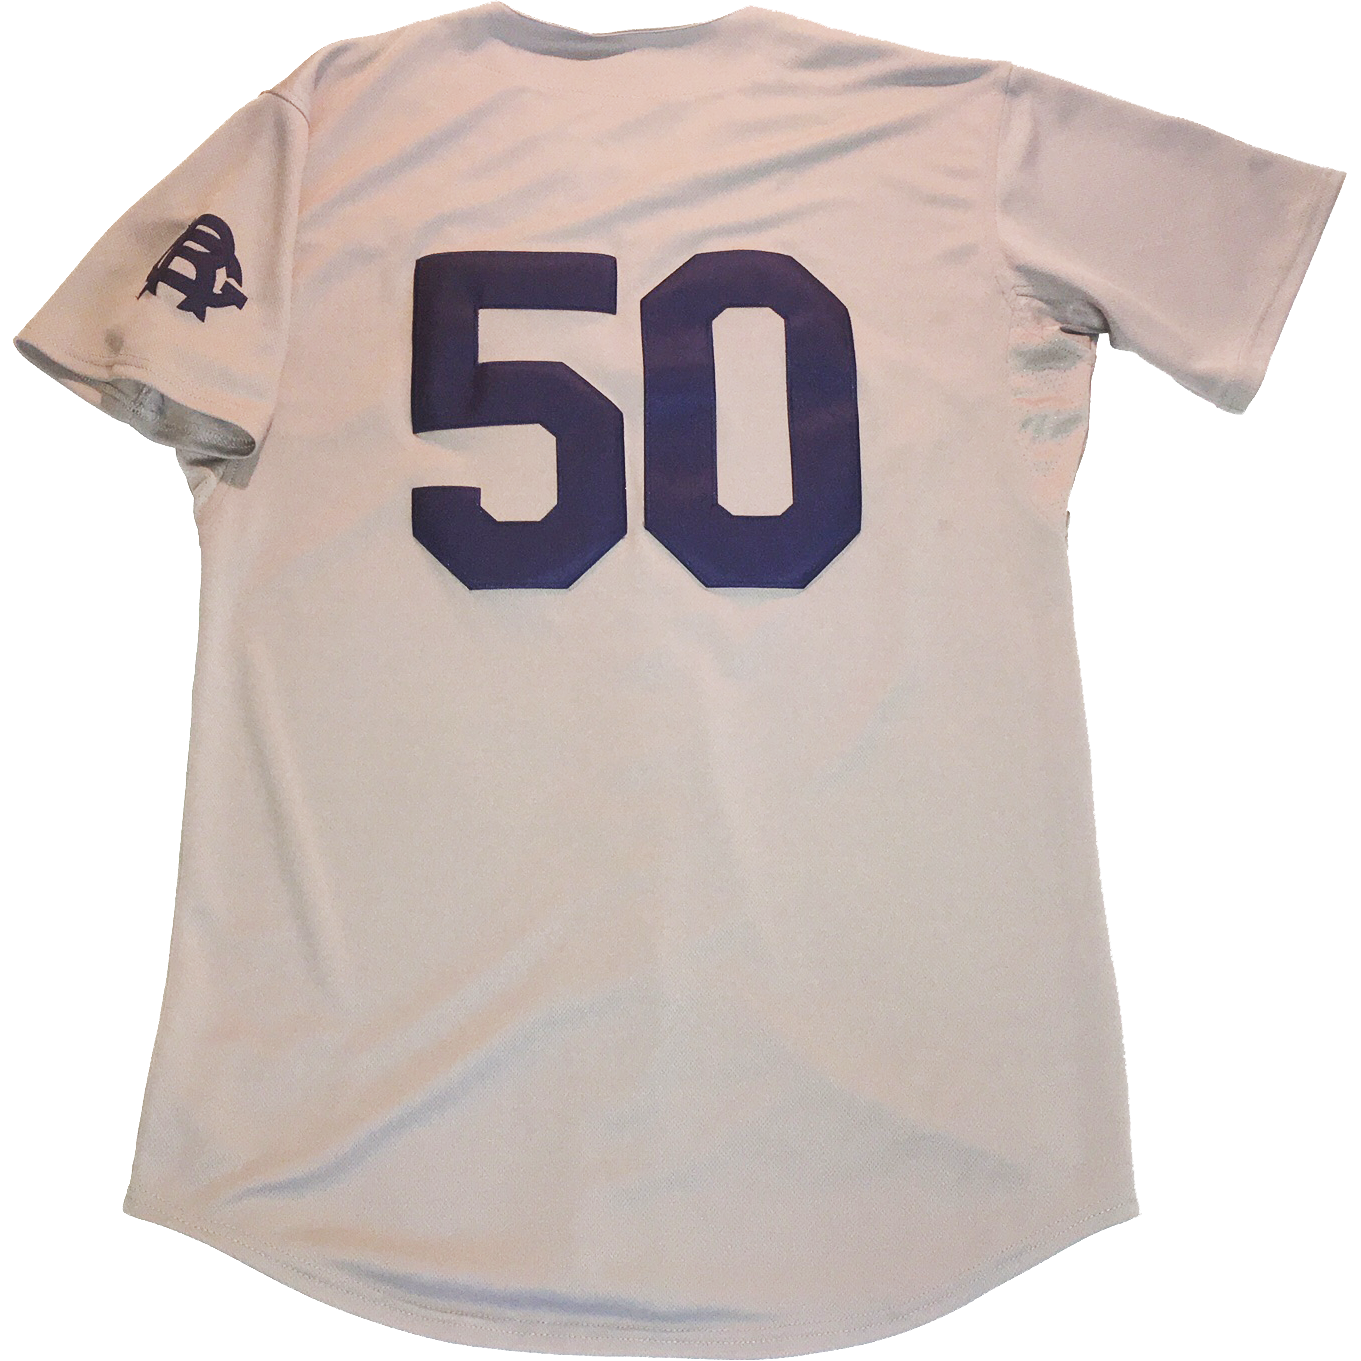 Buy NLBM BK Royal Giants Button Up Baseball Jersey Men's Shirts